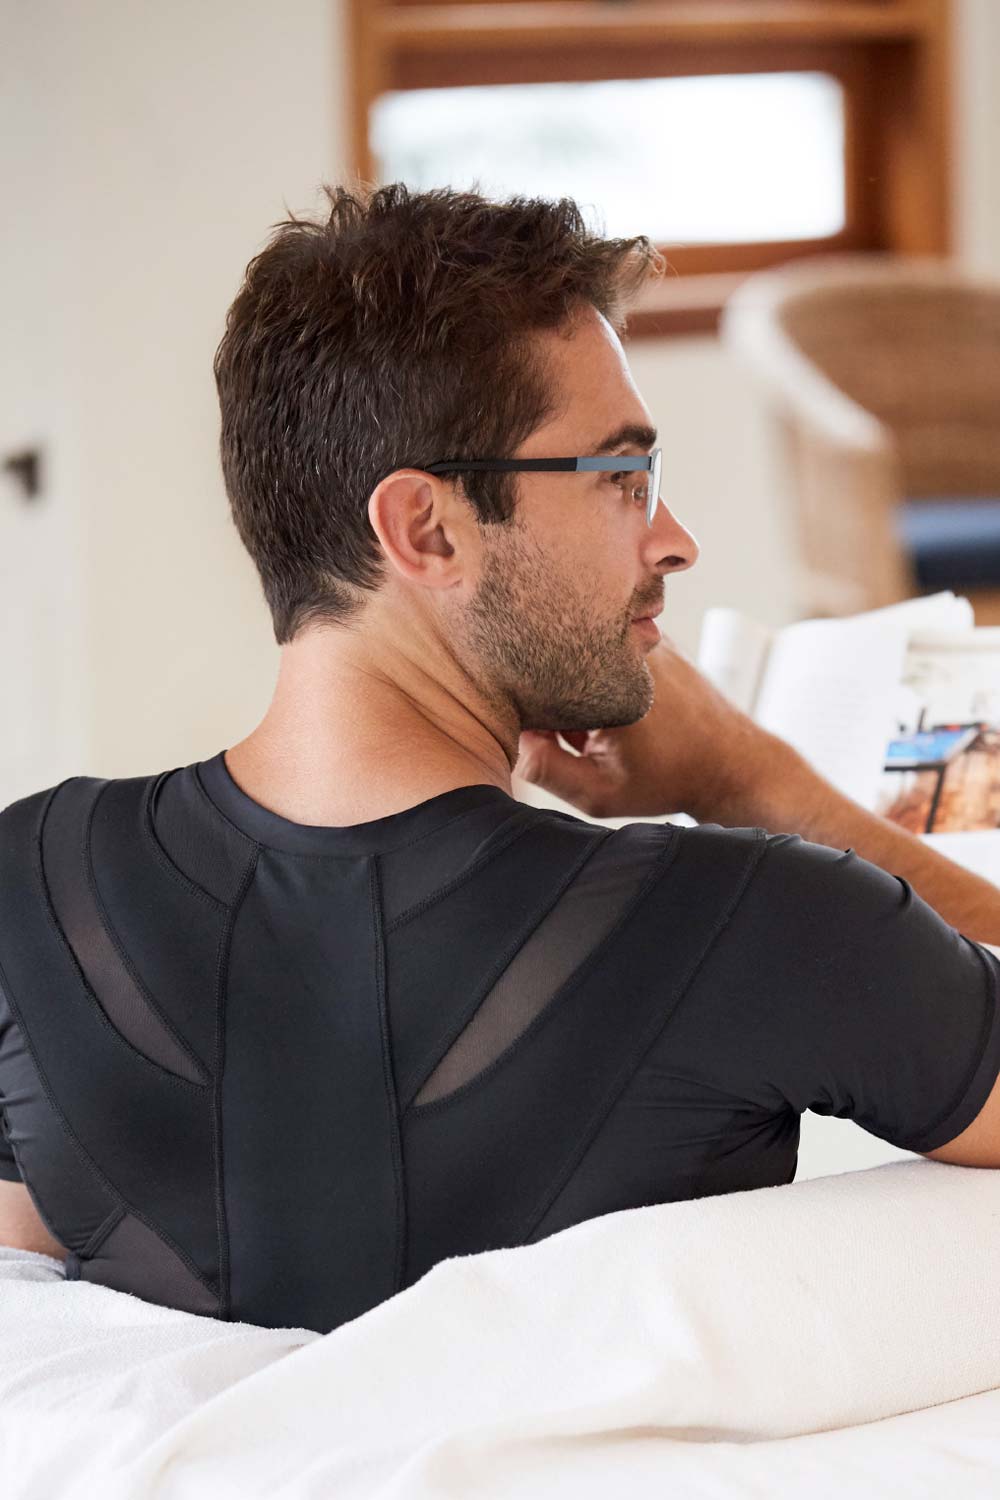 Men's AlignMed Posture Correcting Shirt 2.0 Neuroband Technology